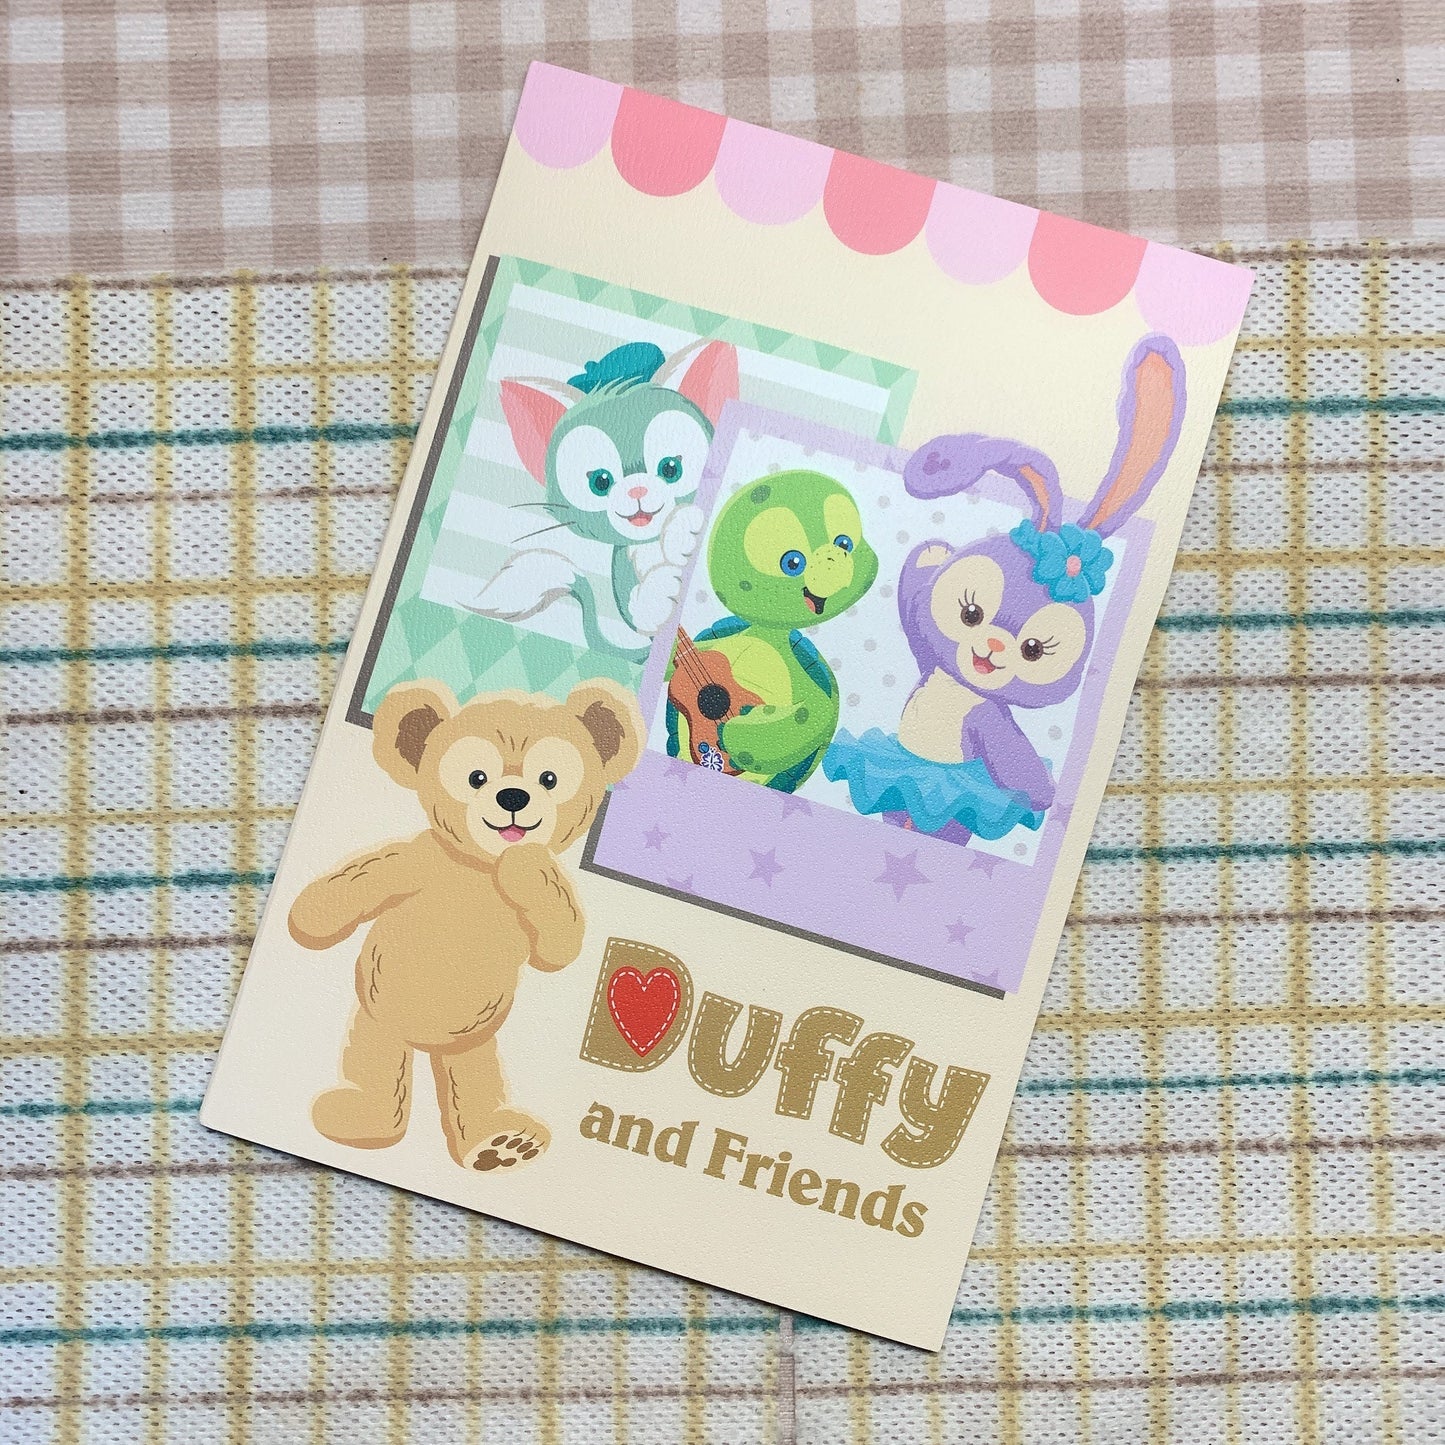 Shanghai Disneyland Duffy and friends sticker book